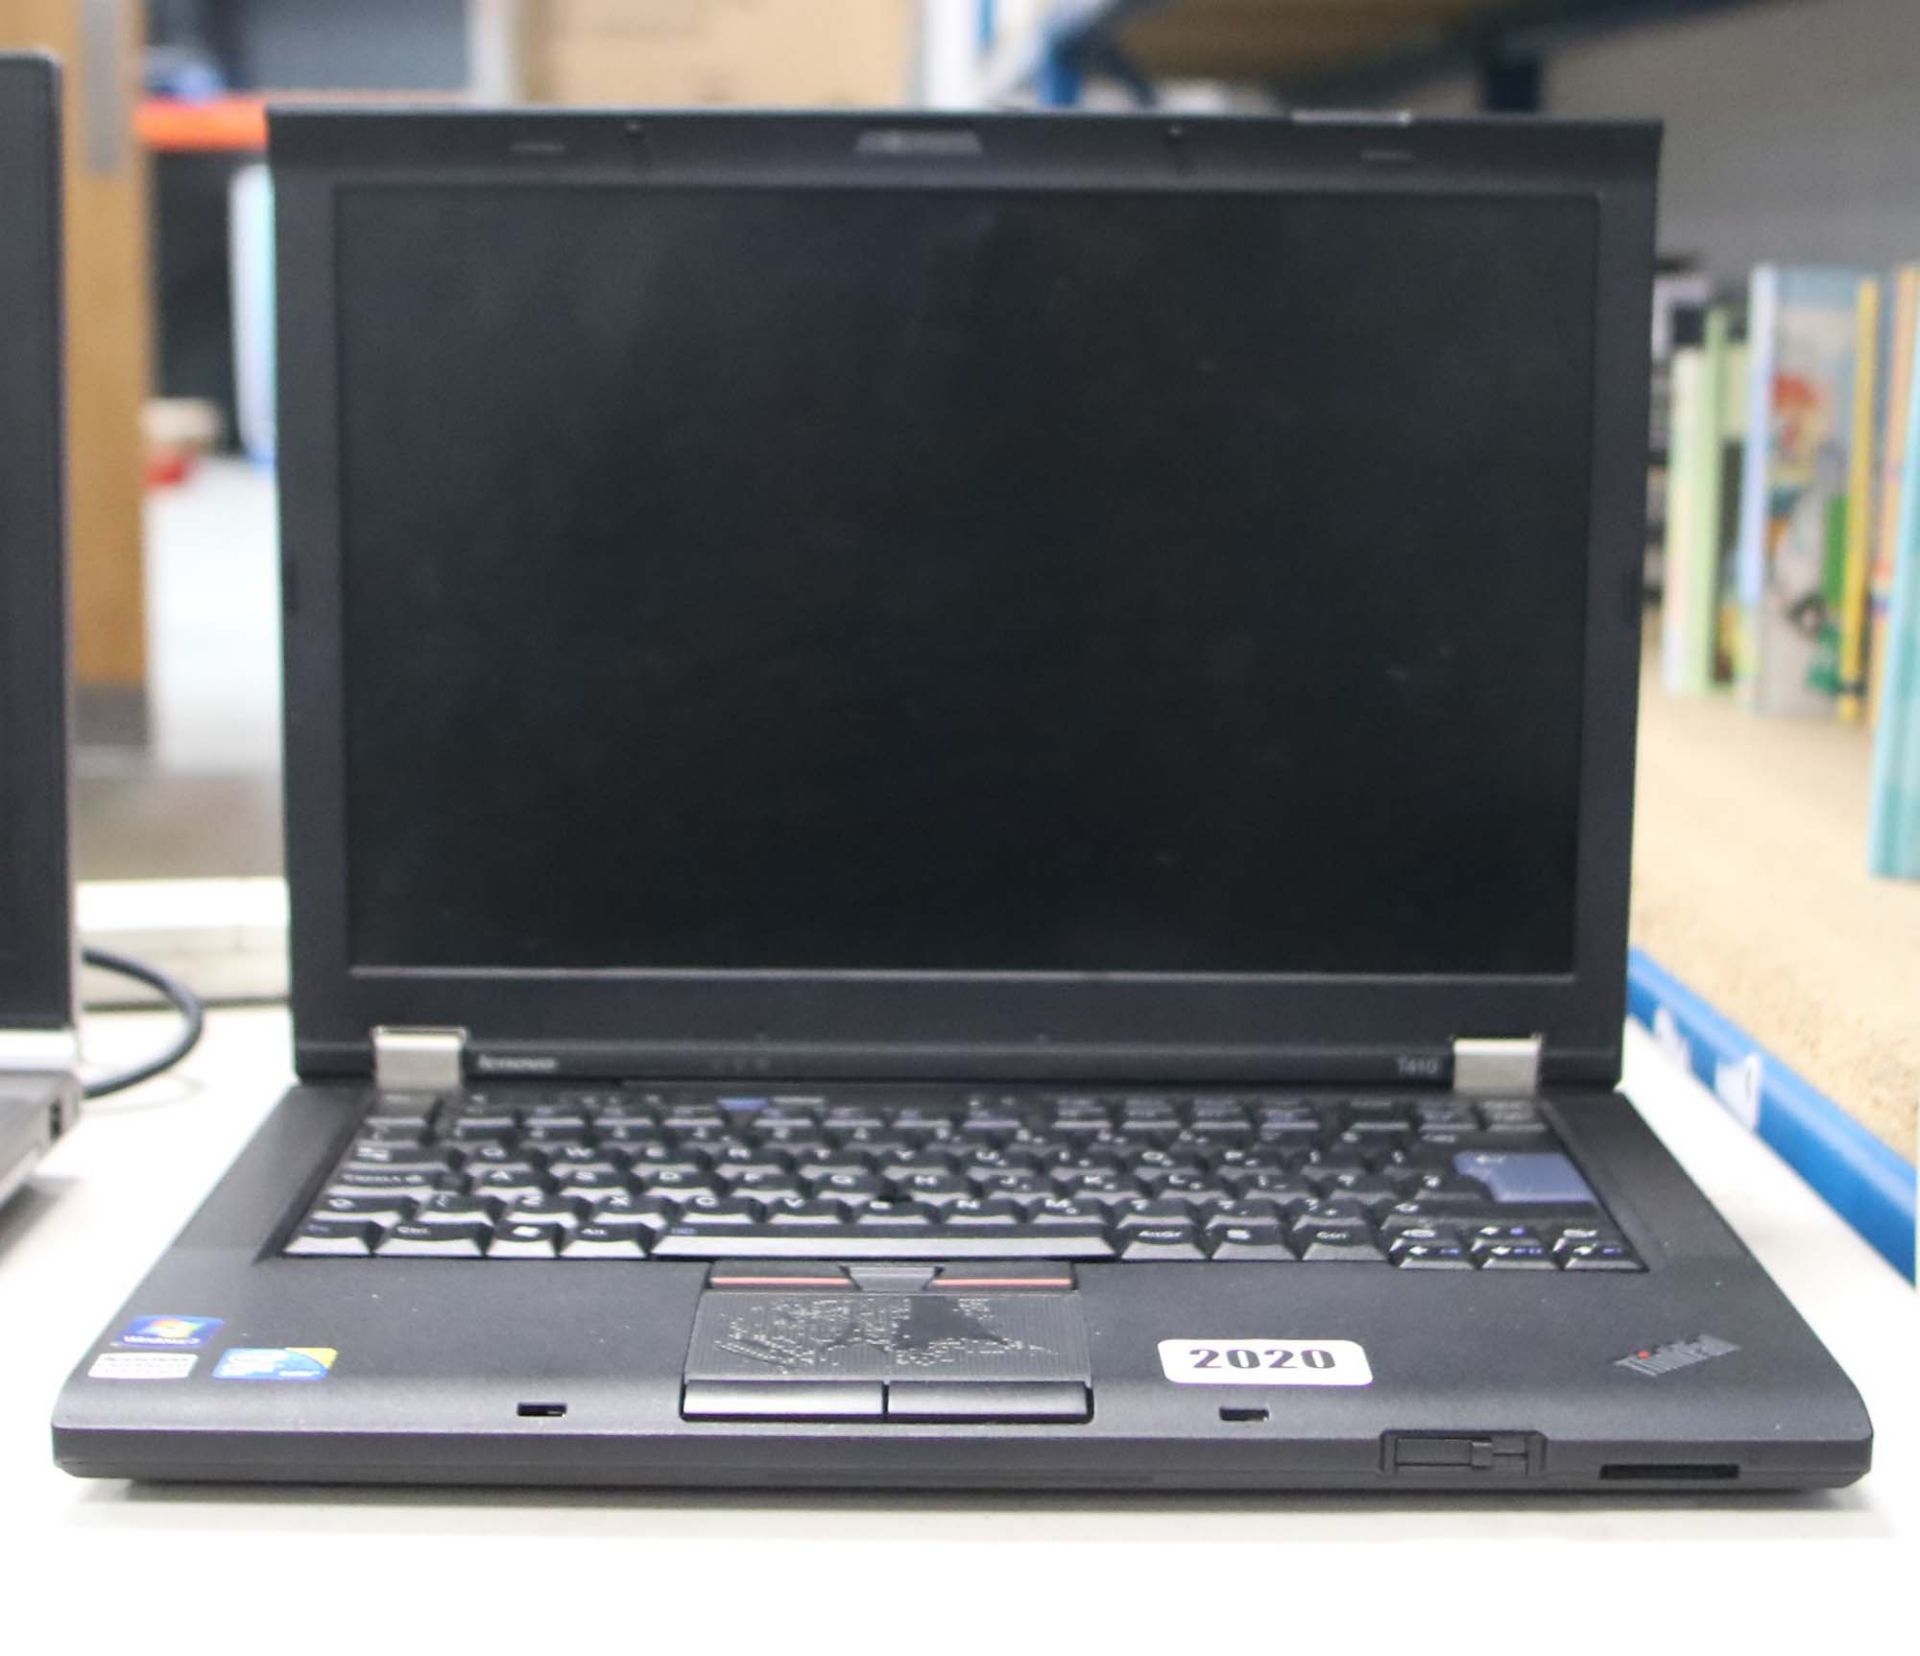 2041 - Lenovo Thinkpad 410 laptop, Intel i5 M series processor, 4gb ram with psu (no hdd)